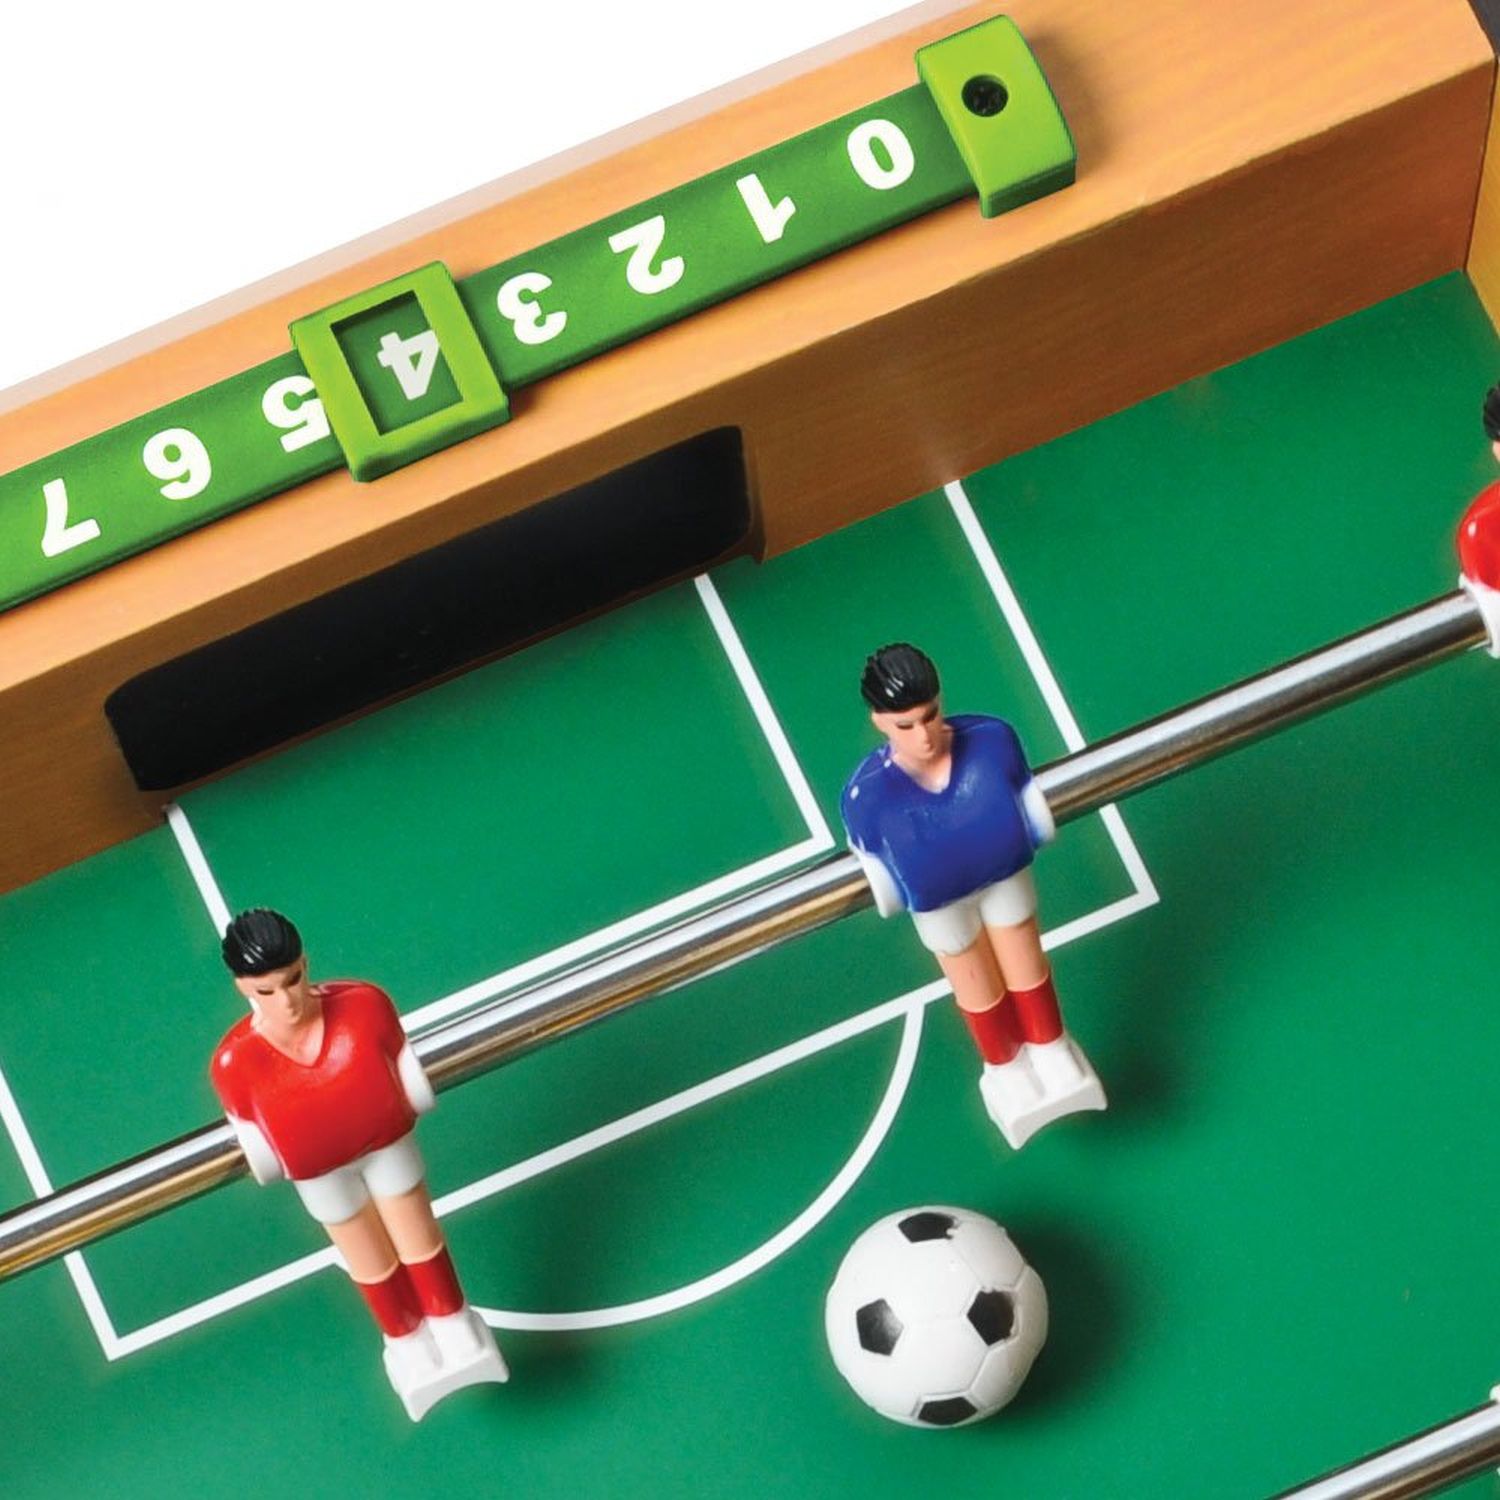 Protocol Tabletop Foosball (Soccer) Game - image 2 of 3